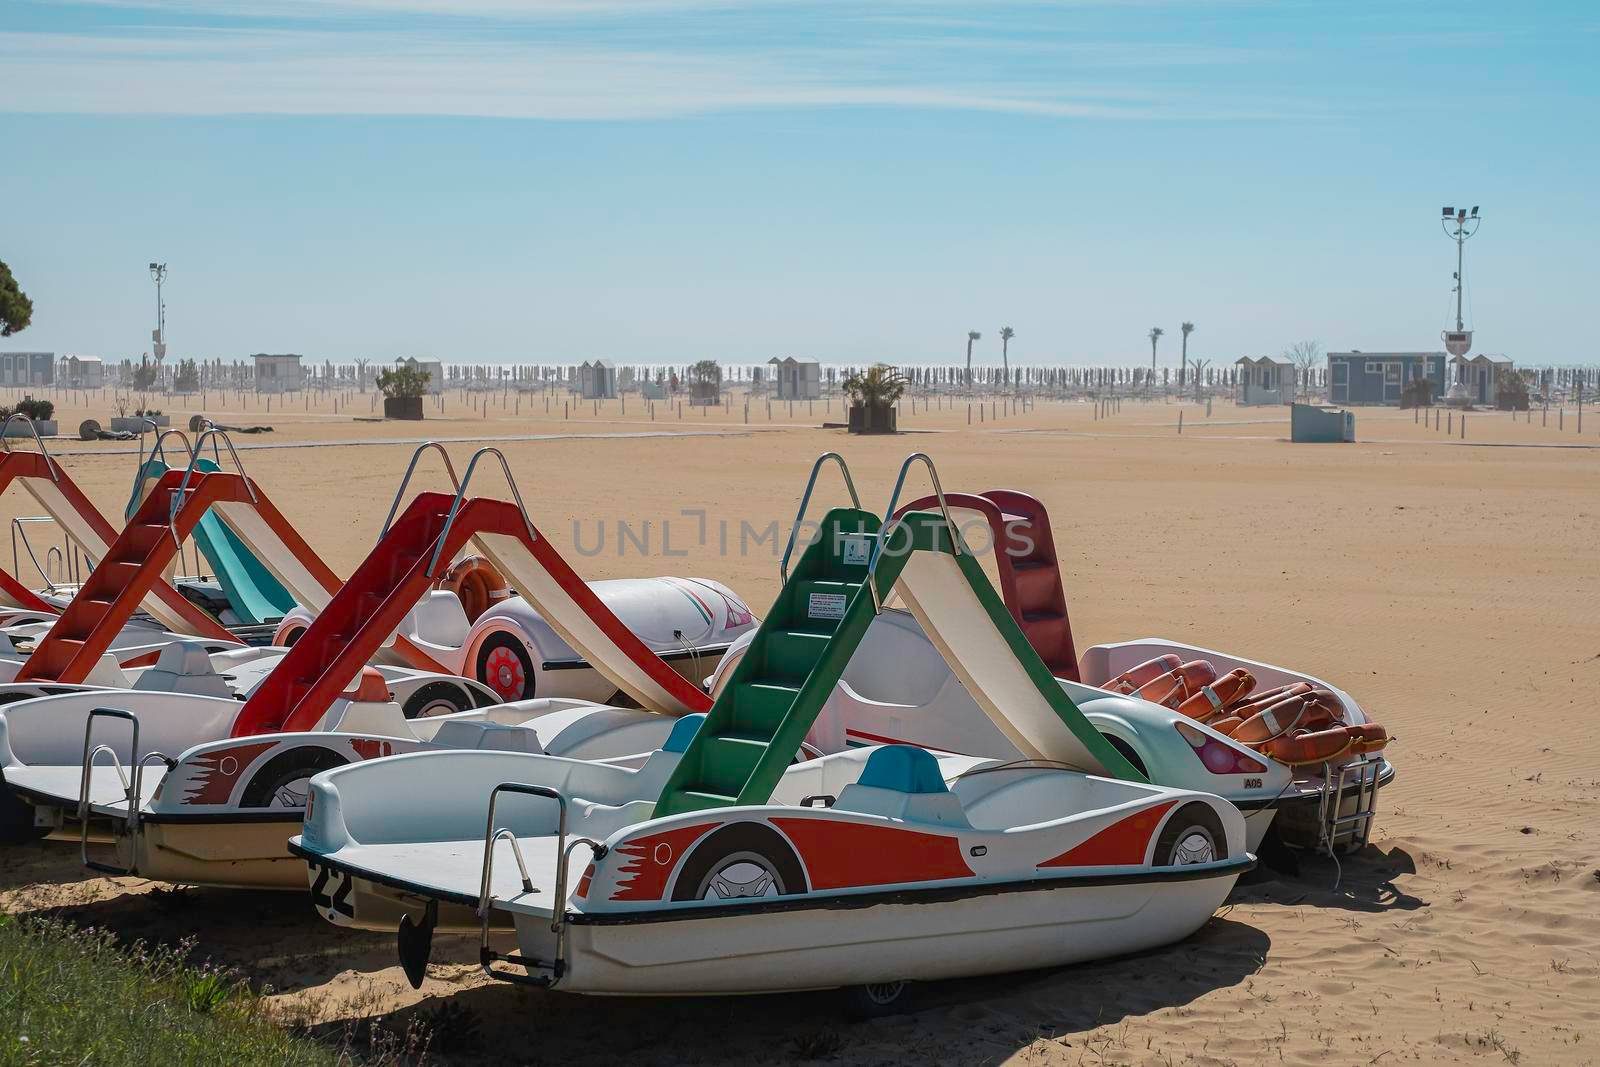 catamarans with an entertaining slide on the beach. Italy